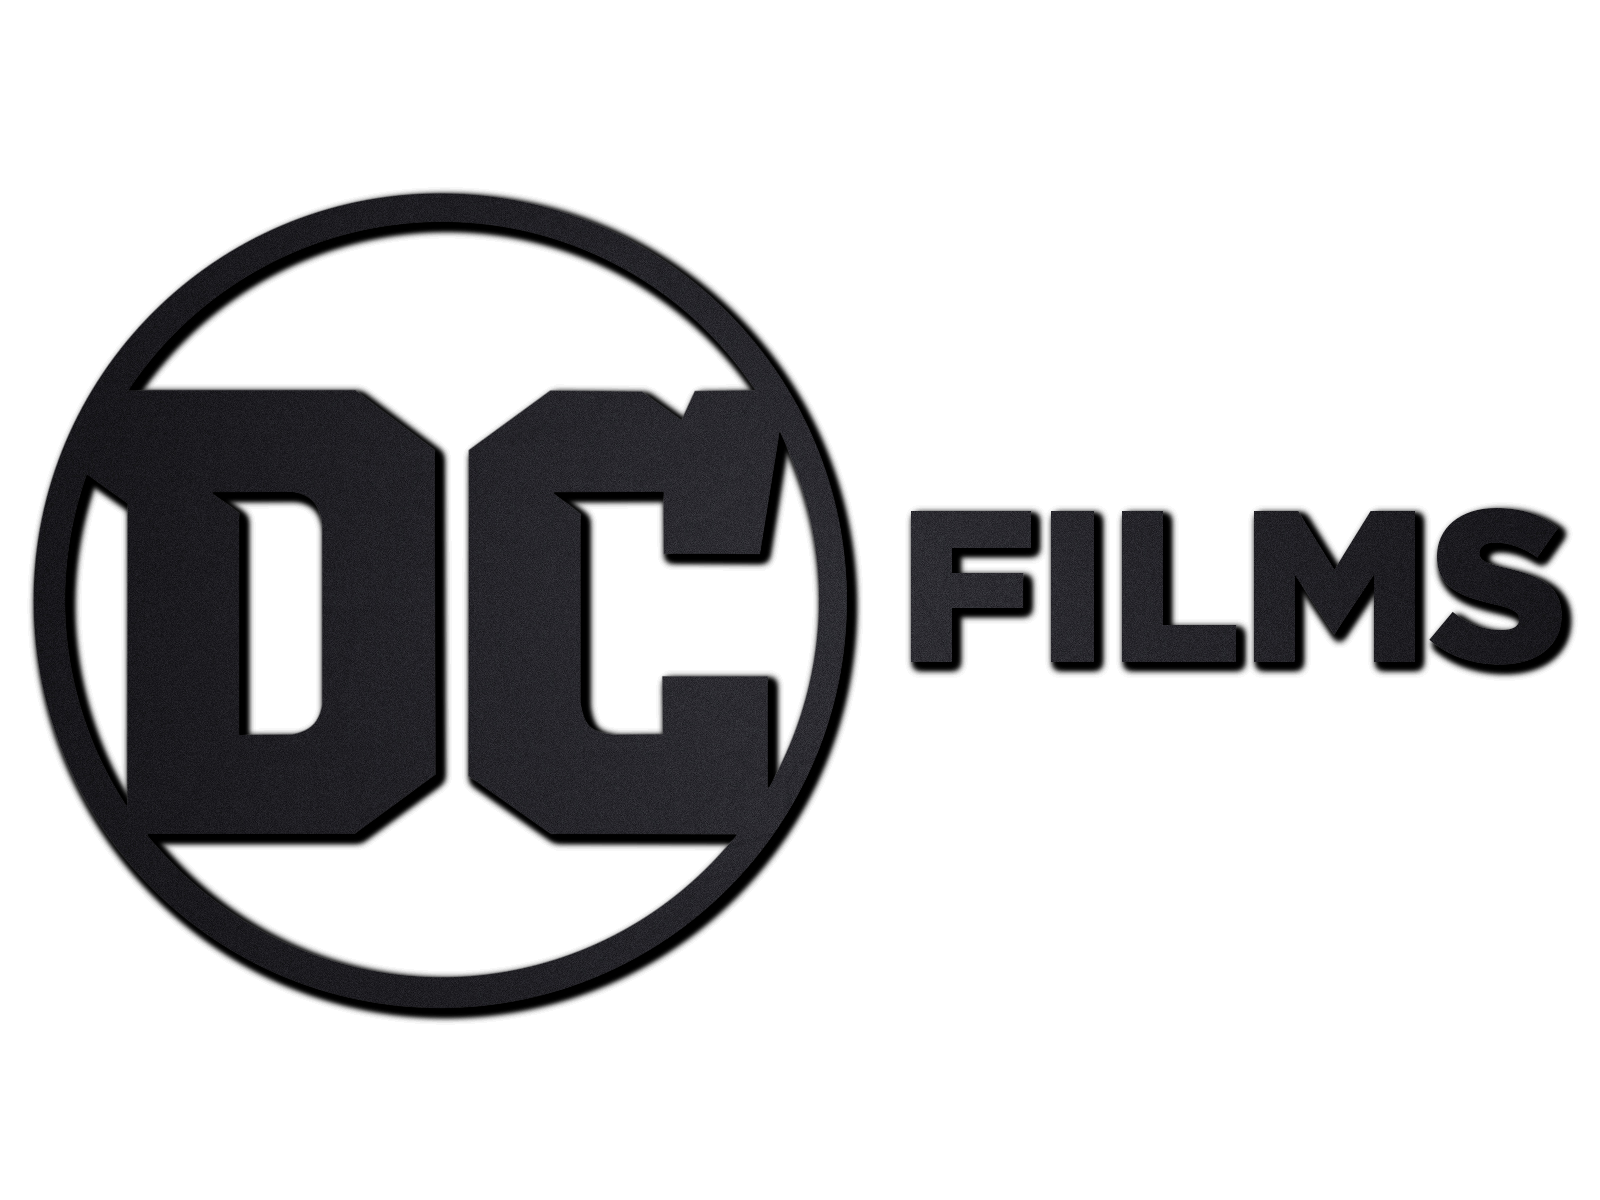 DC Films - company